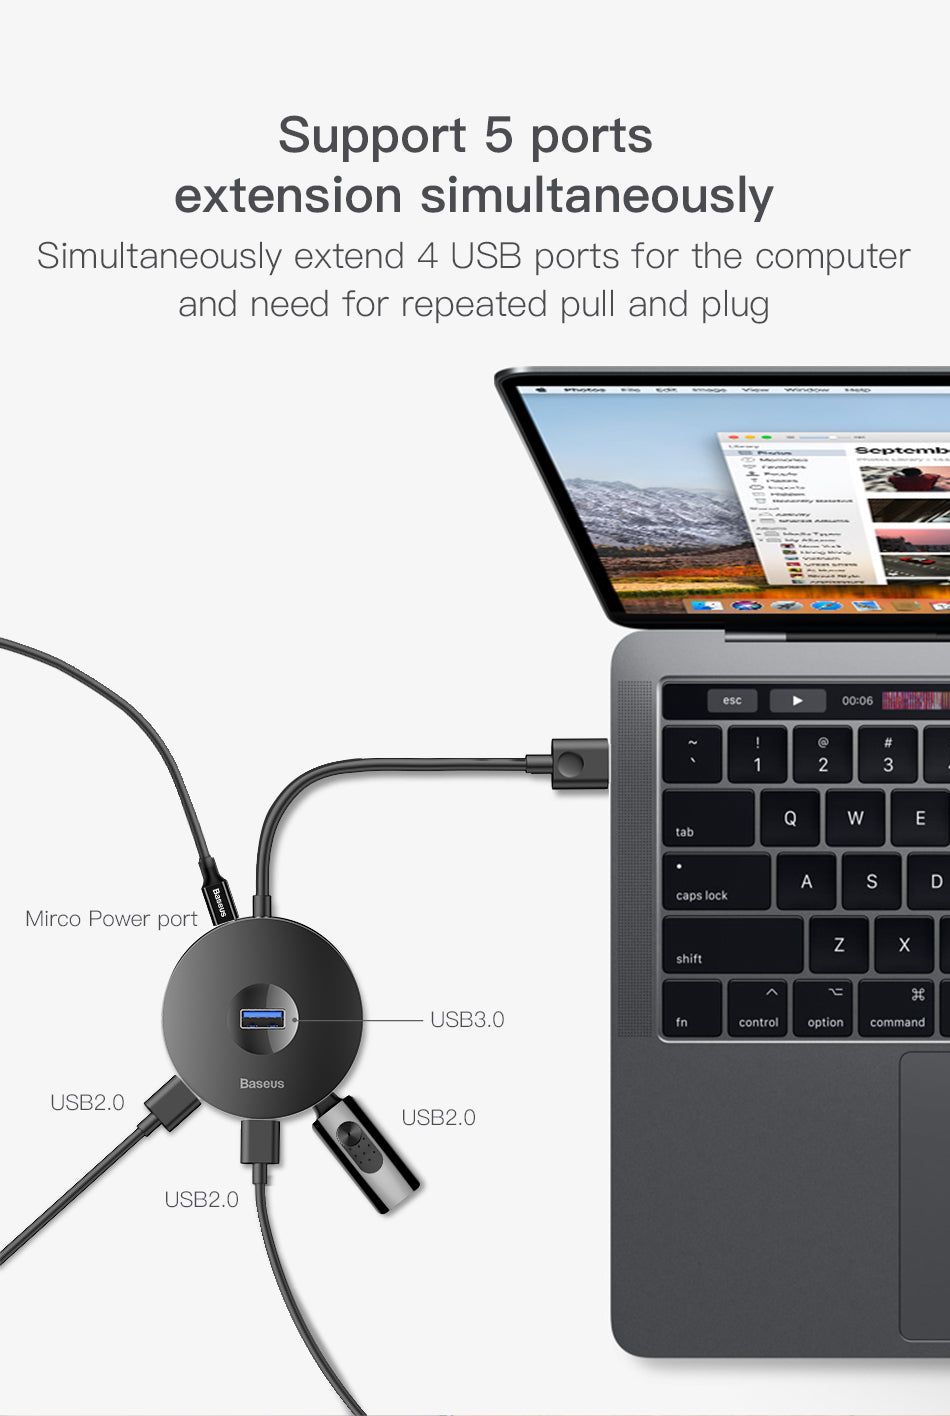 Round Box USB Adapter Hub Notebook